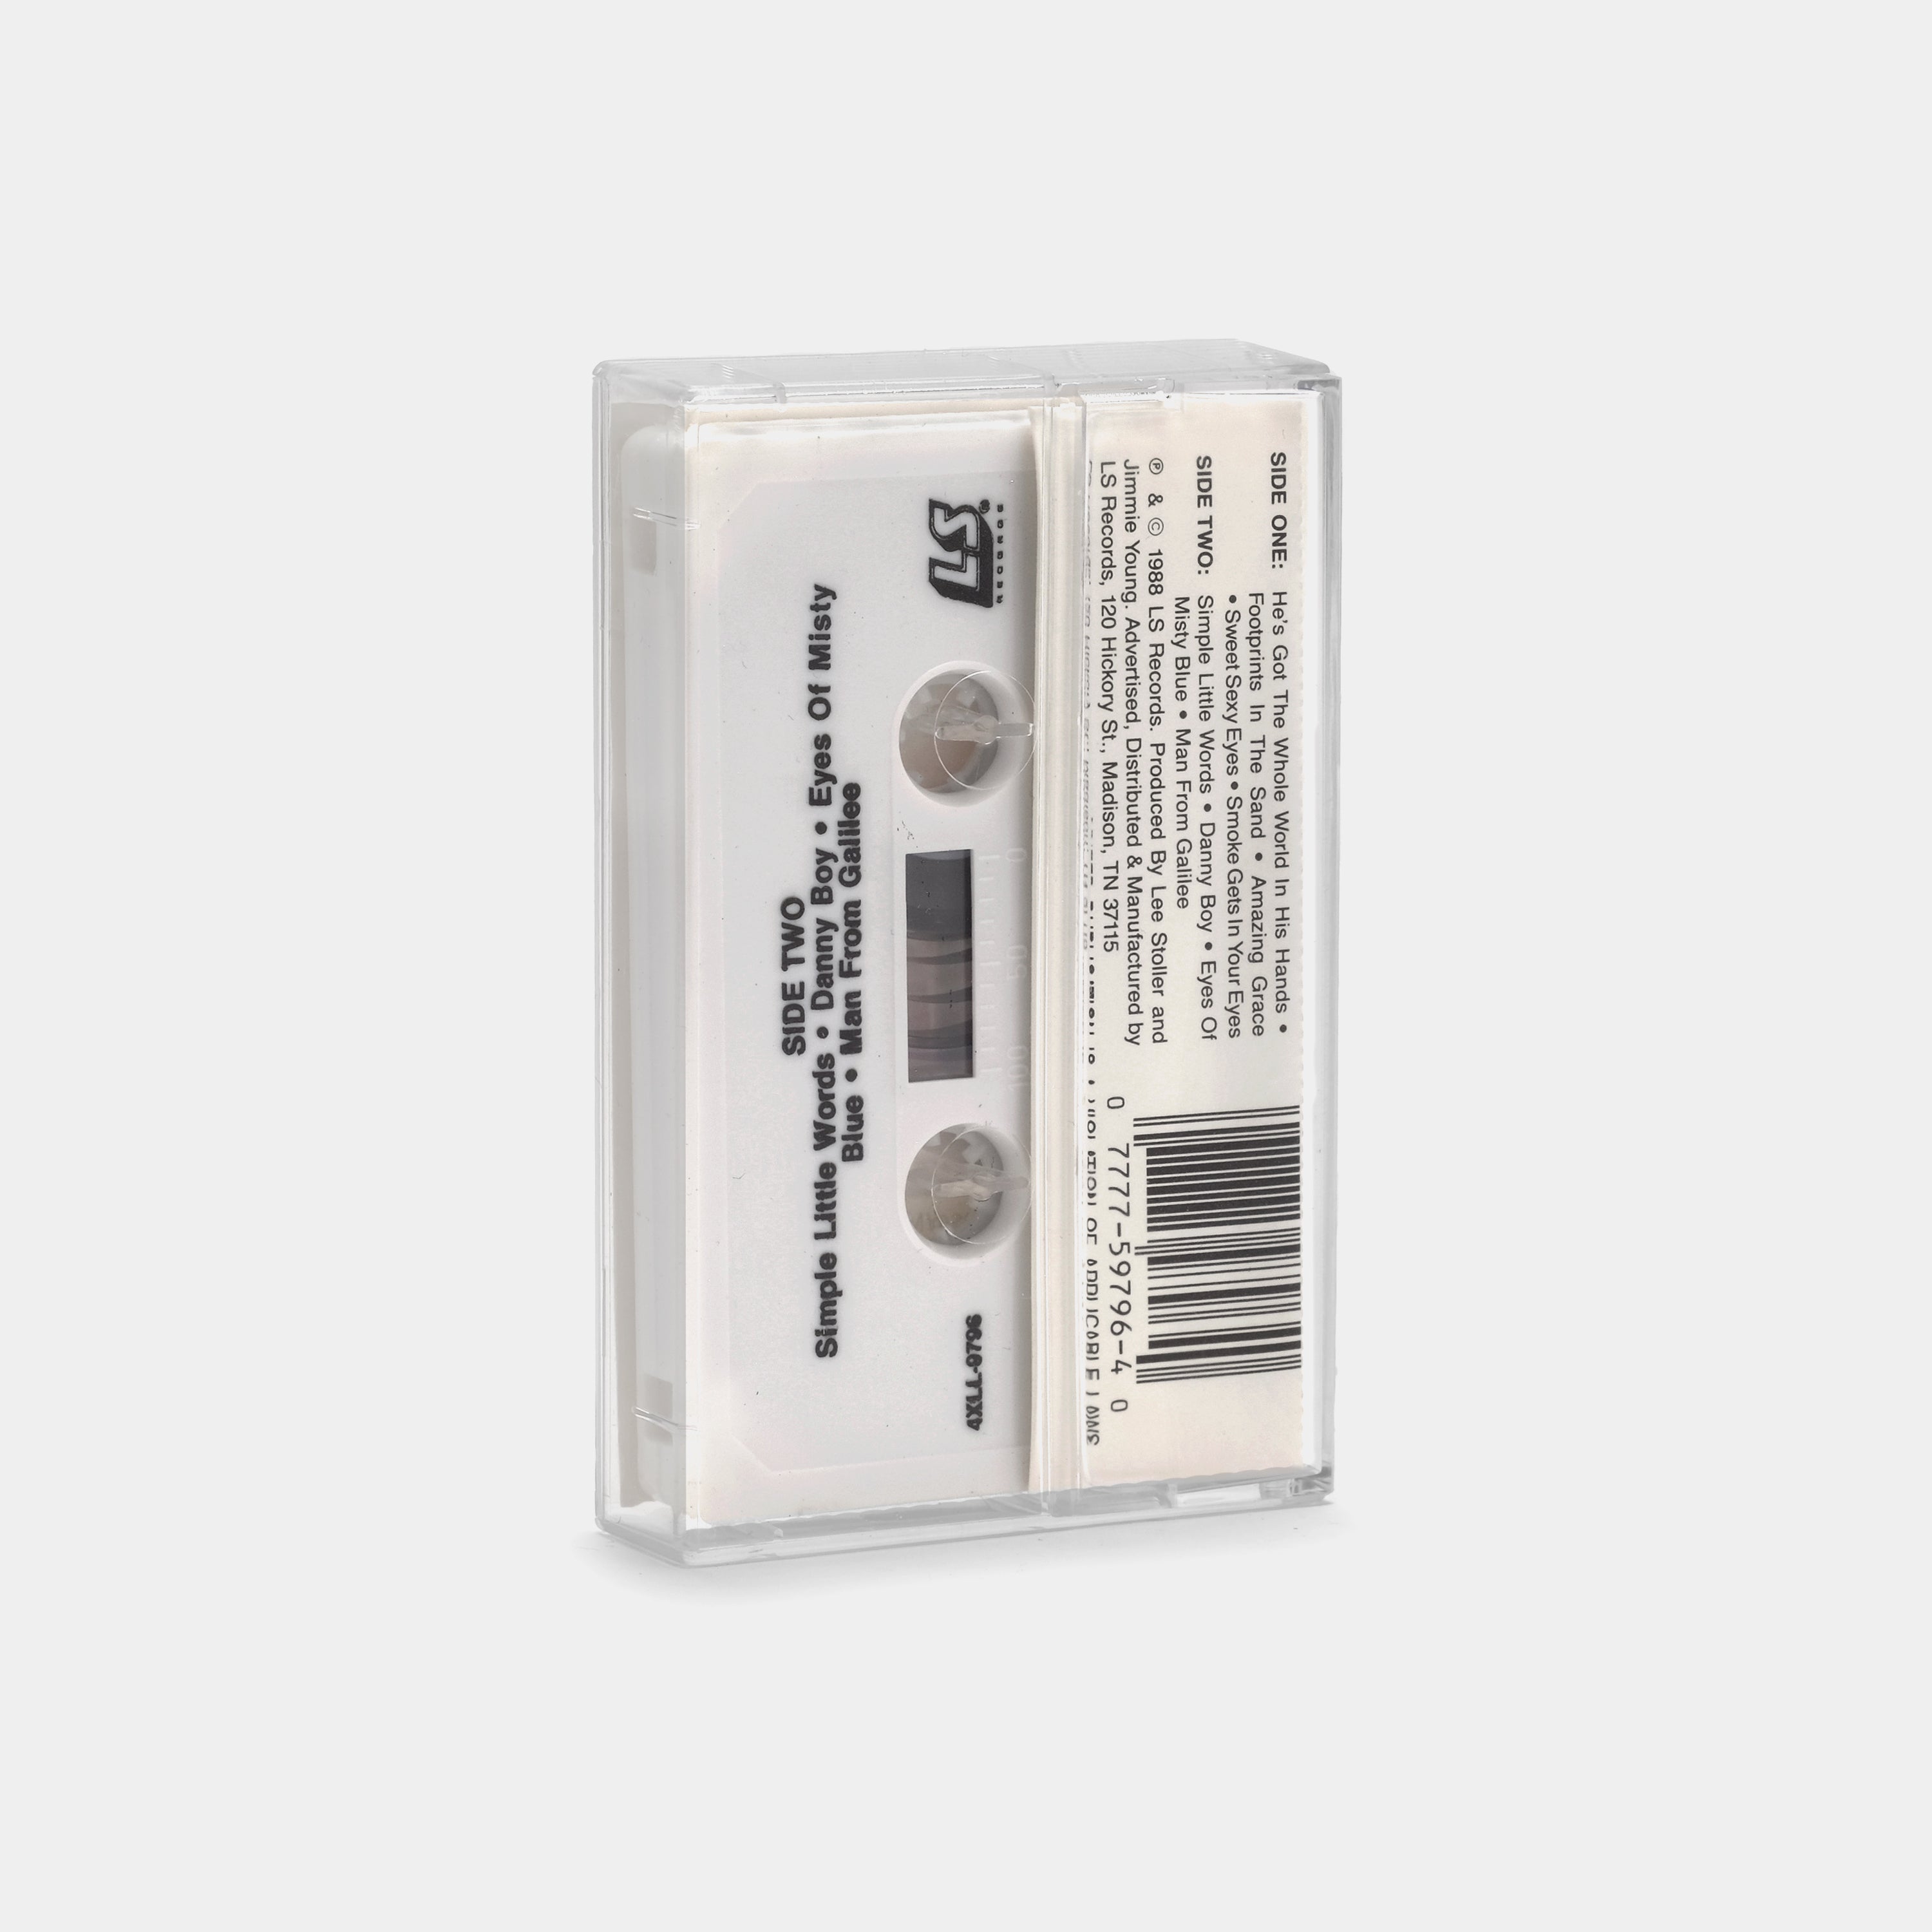 Cristy Lane - Greatest Hits Vol 2 Cassette Tape